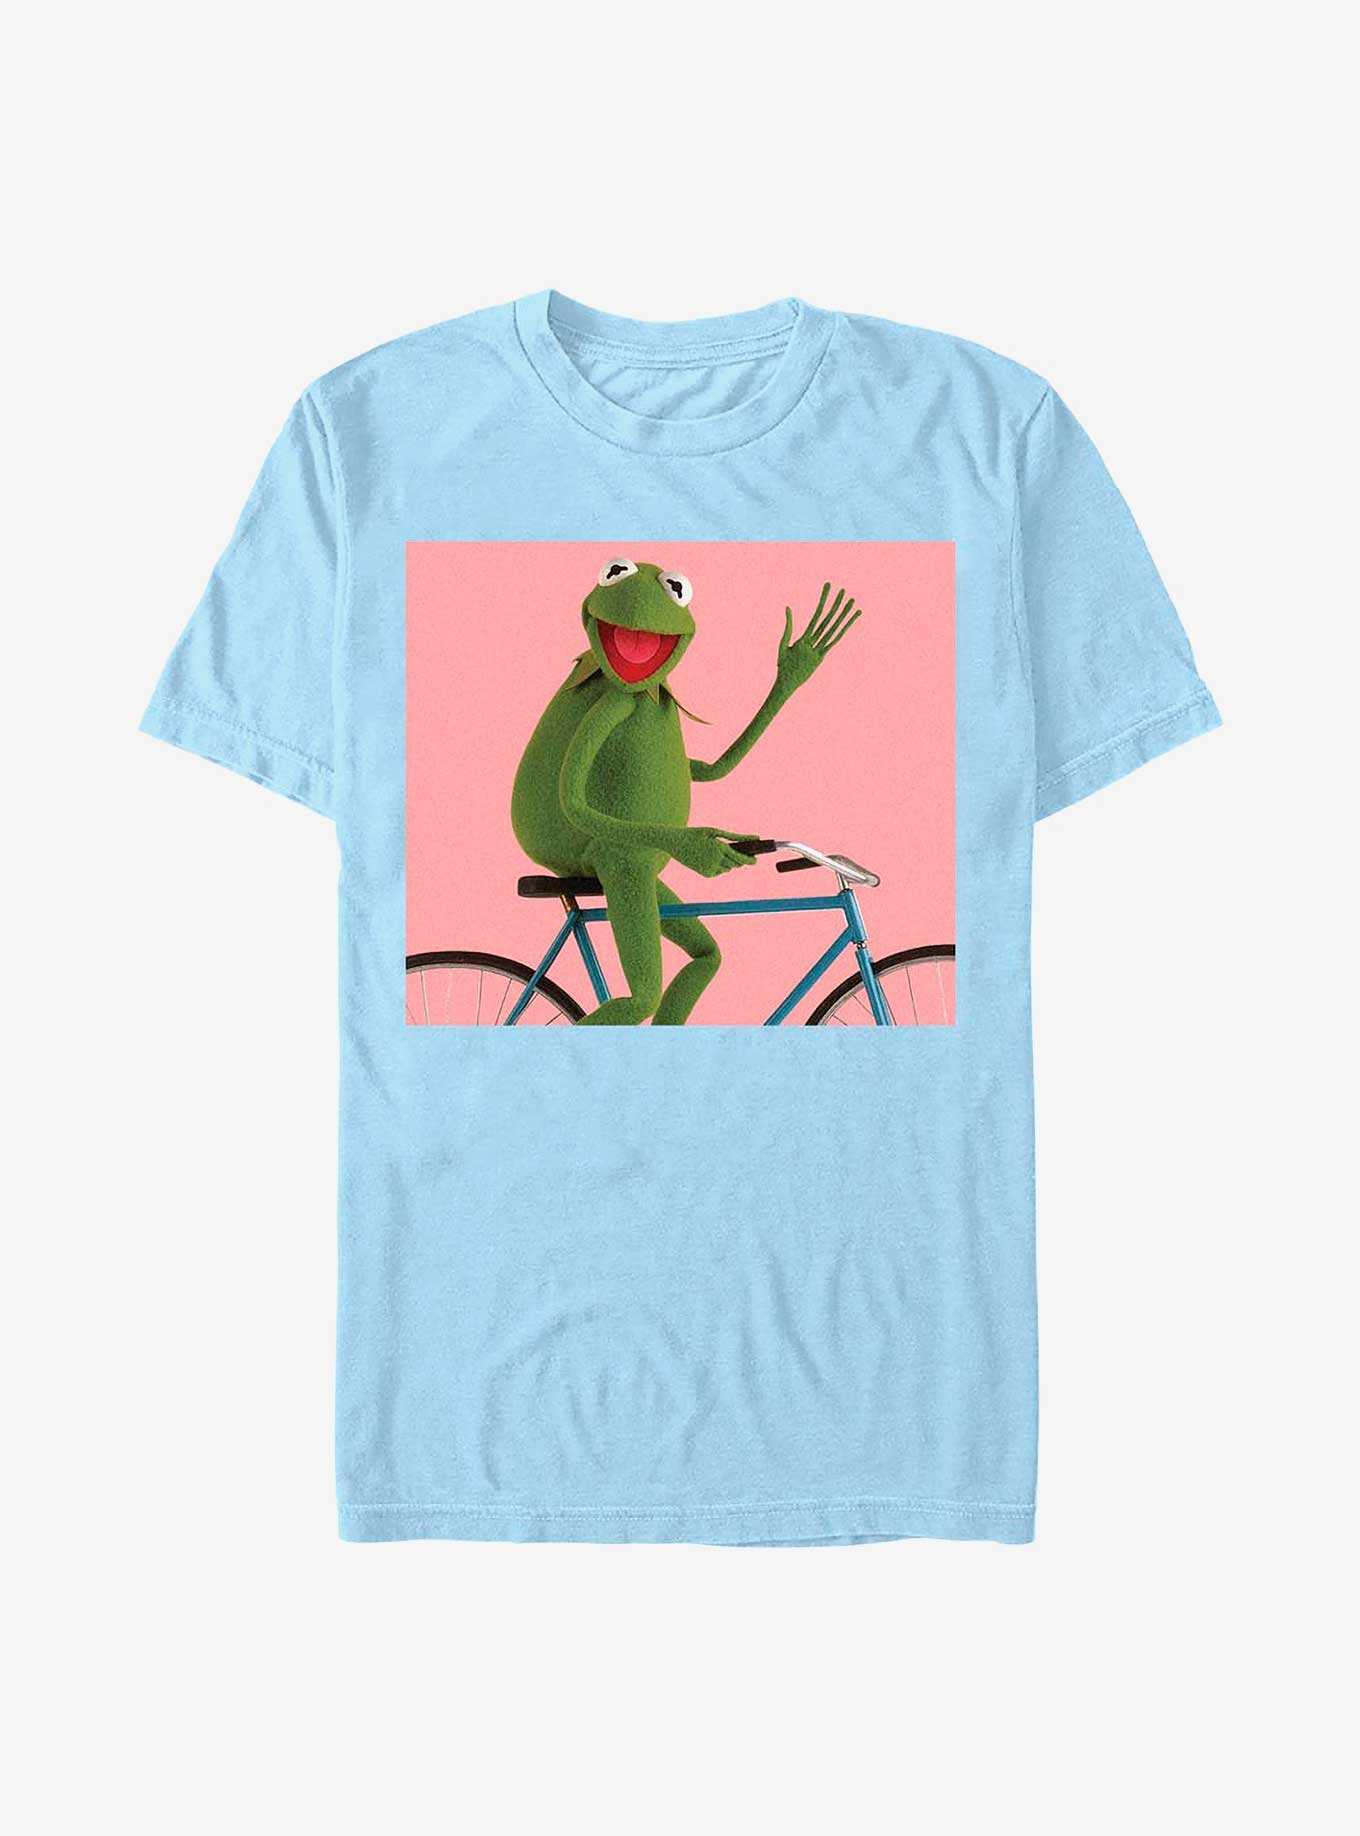 Disney The Muppets Biking Kermit T-Shirt, , hi-res